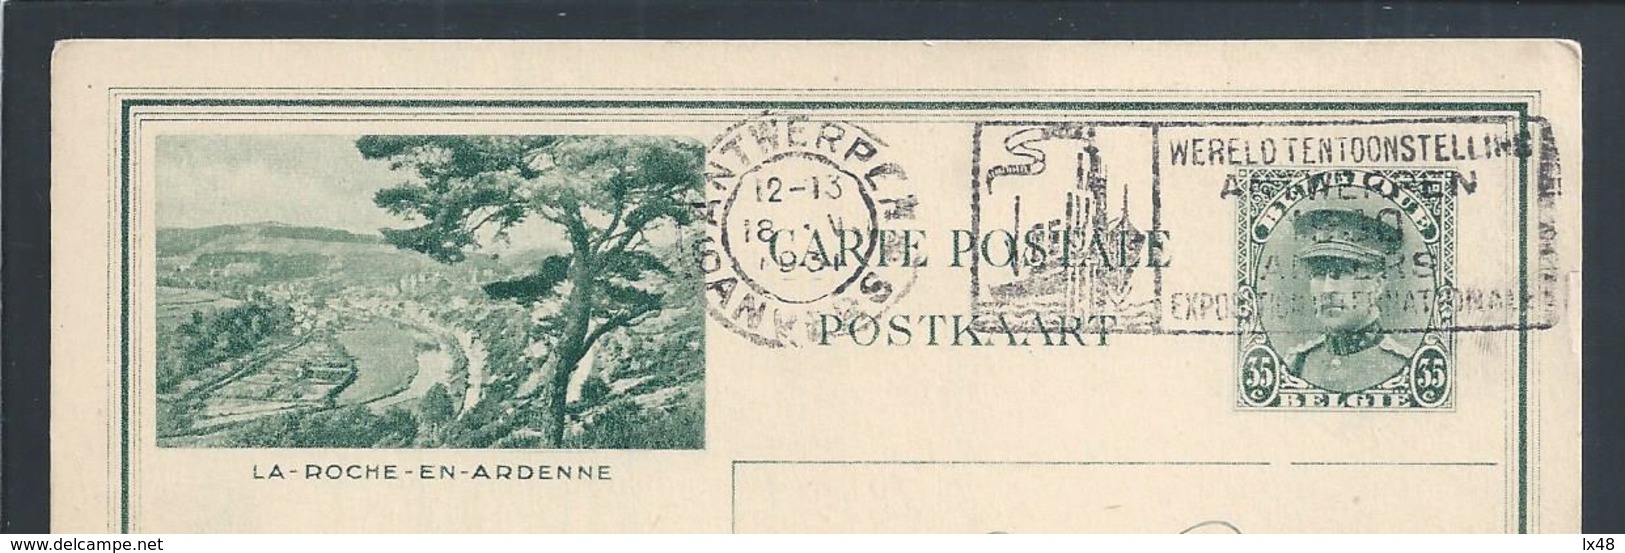 Pennant Of International Fair Liege And Antwerp 1930. Postcard Stationery Of La Roche En Ardenne. King Albert I. - 1930 – Liège (Belgium)